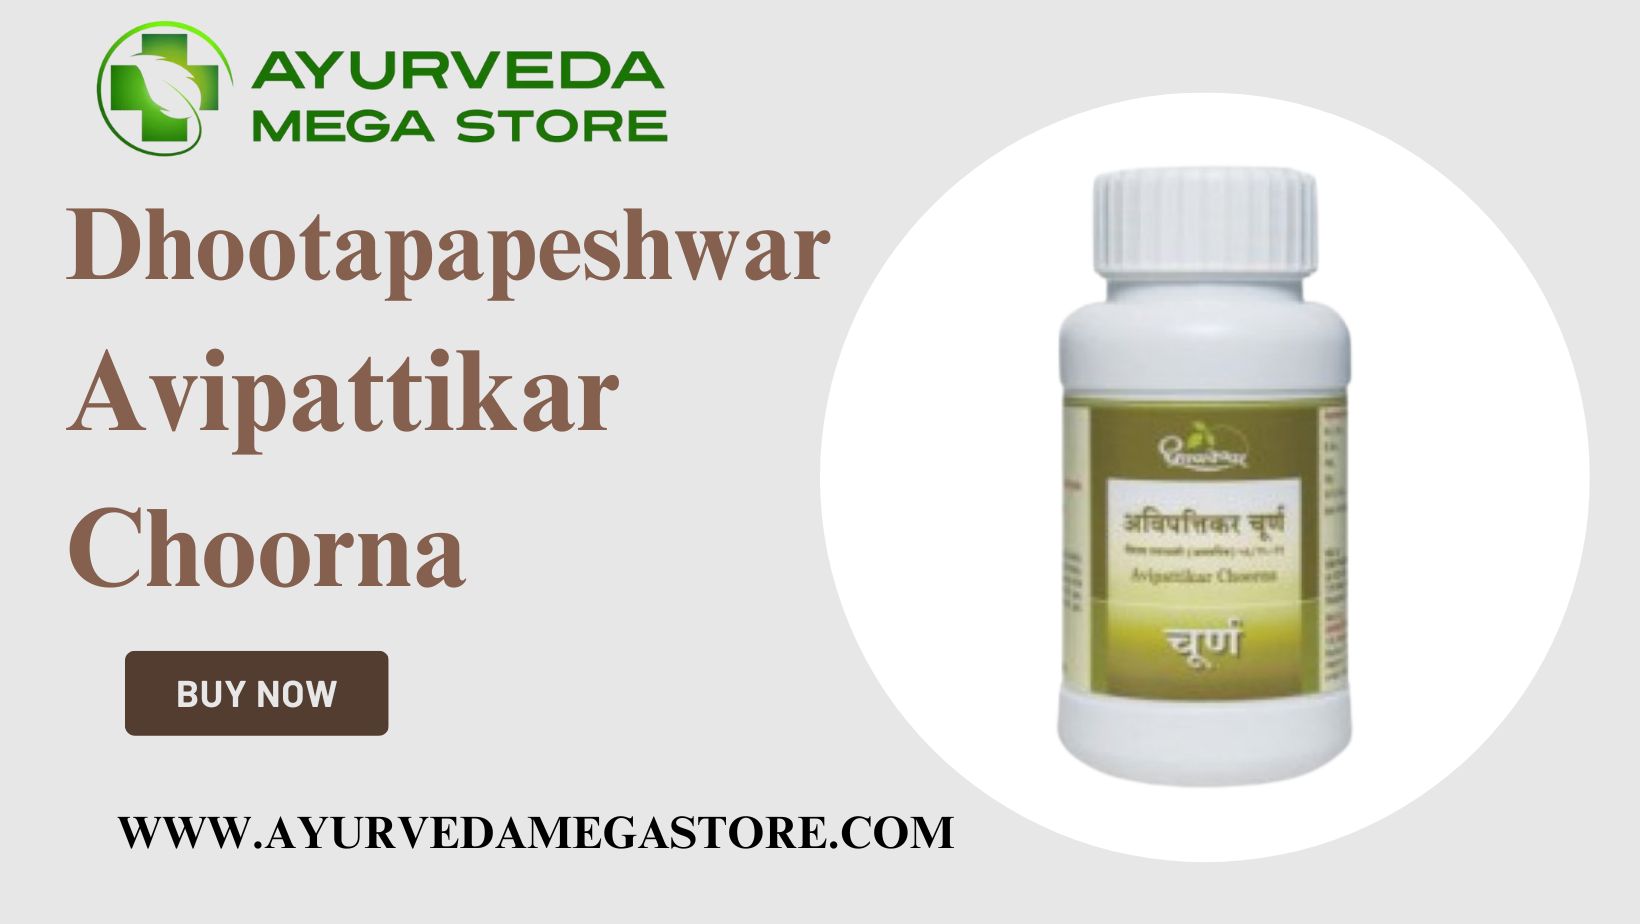 Dhootapapeshwar Avipattikar Choorna: The Ultimate Ayurvedic Solution for Digestive Issues 